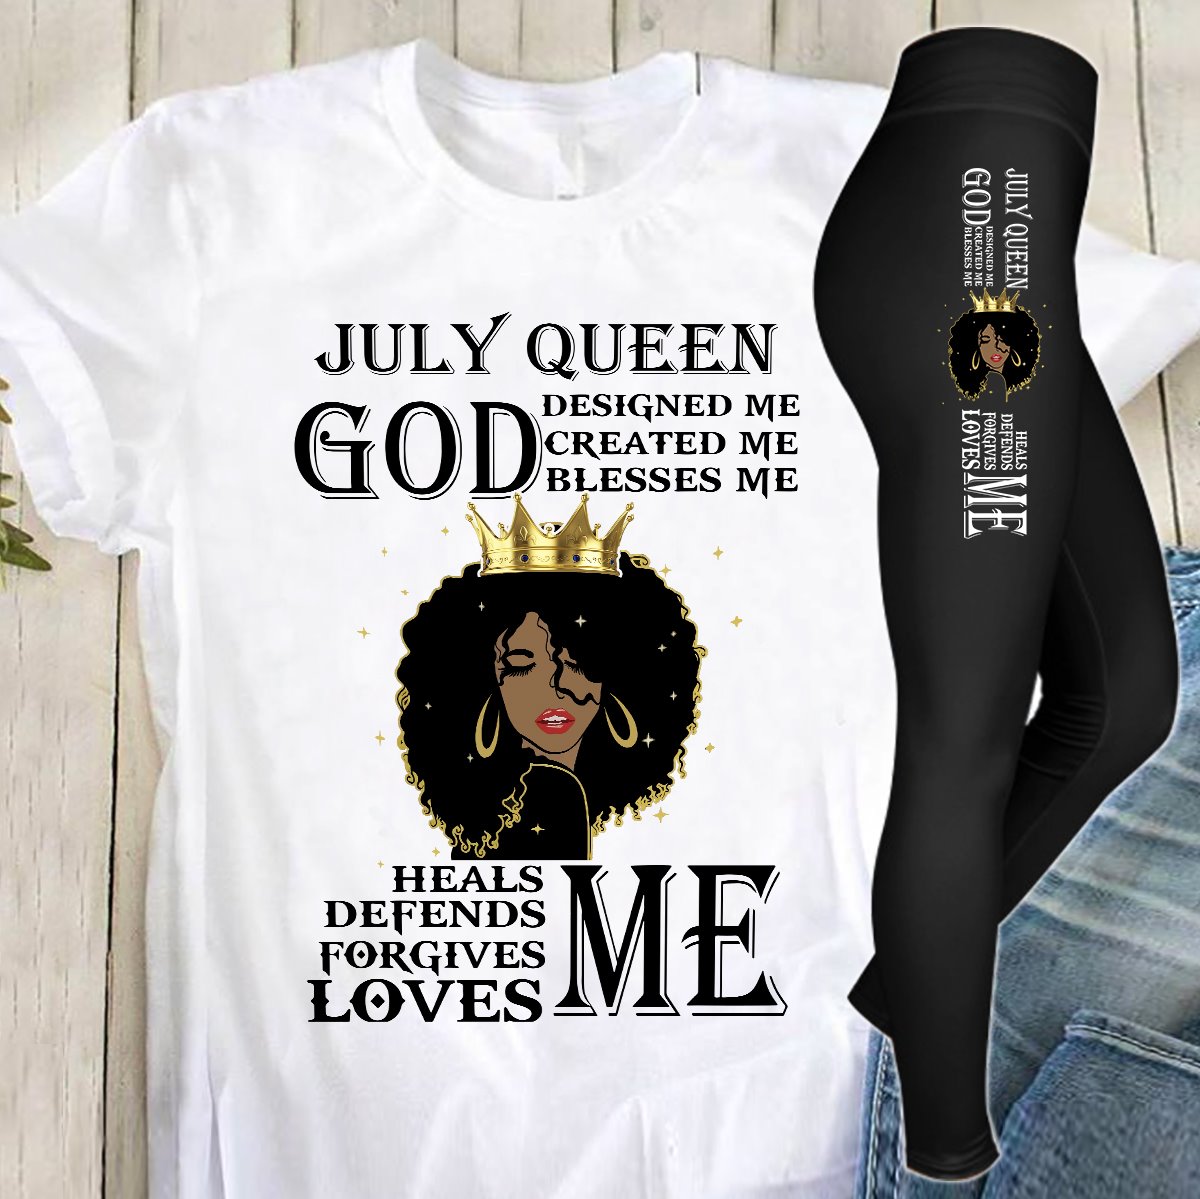 July queen god designed me, created me, blesses me, heals me, fefends me, forgives me